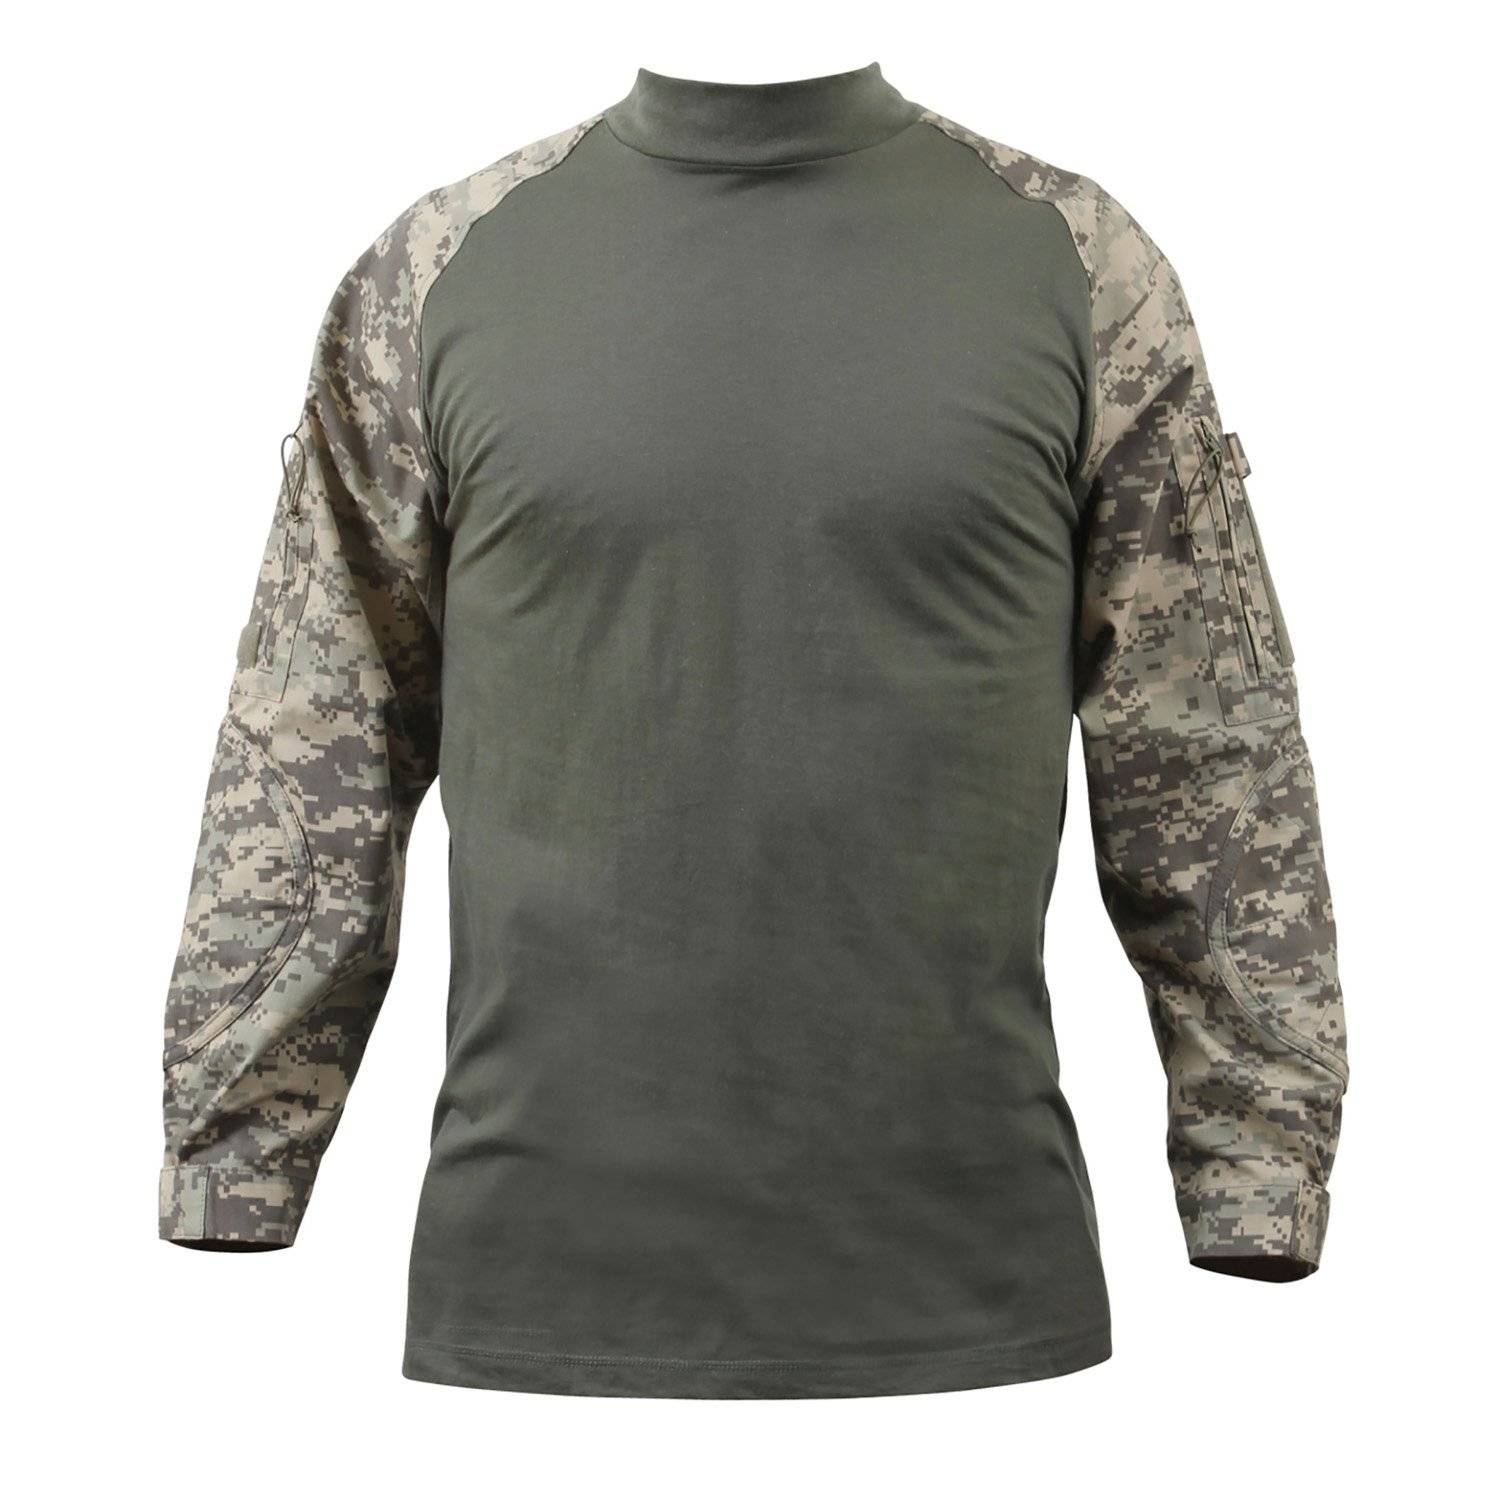 EUC GI Massif ACU Army Digital Camo Military Combat Shirt Airsoft Paintball Top 